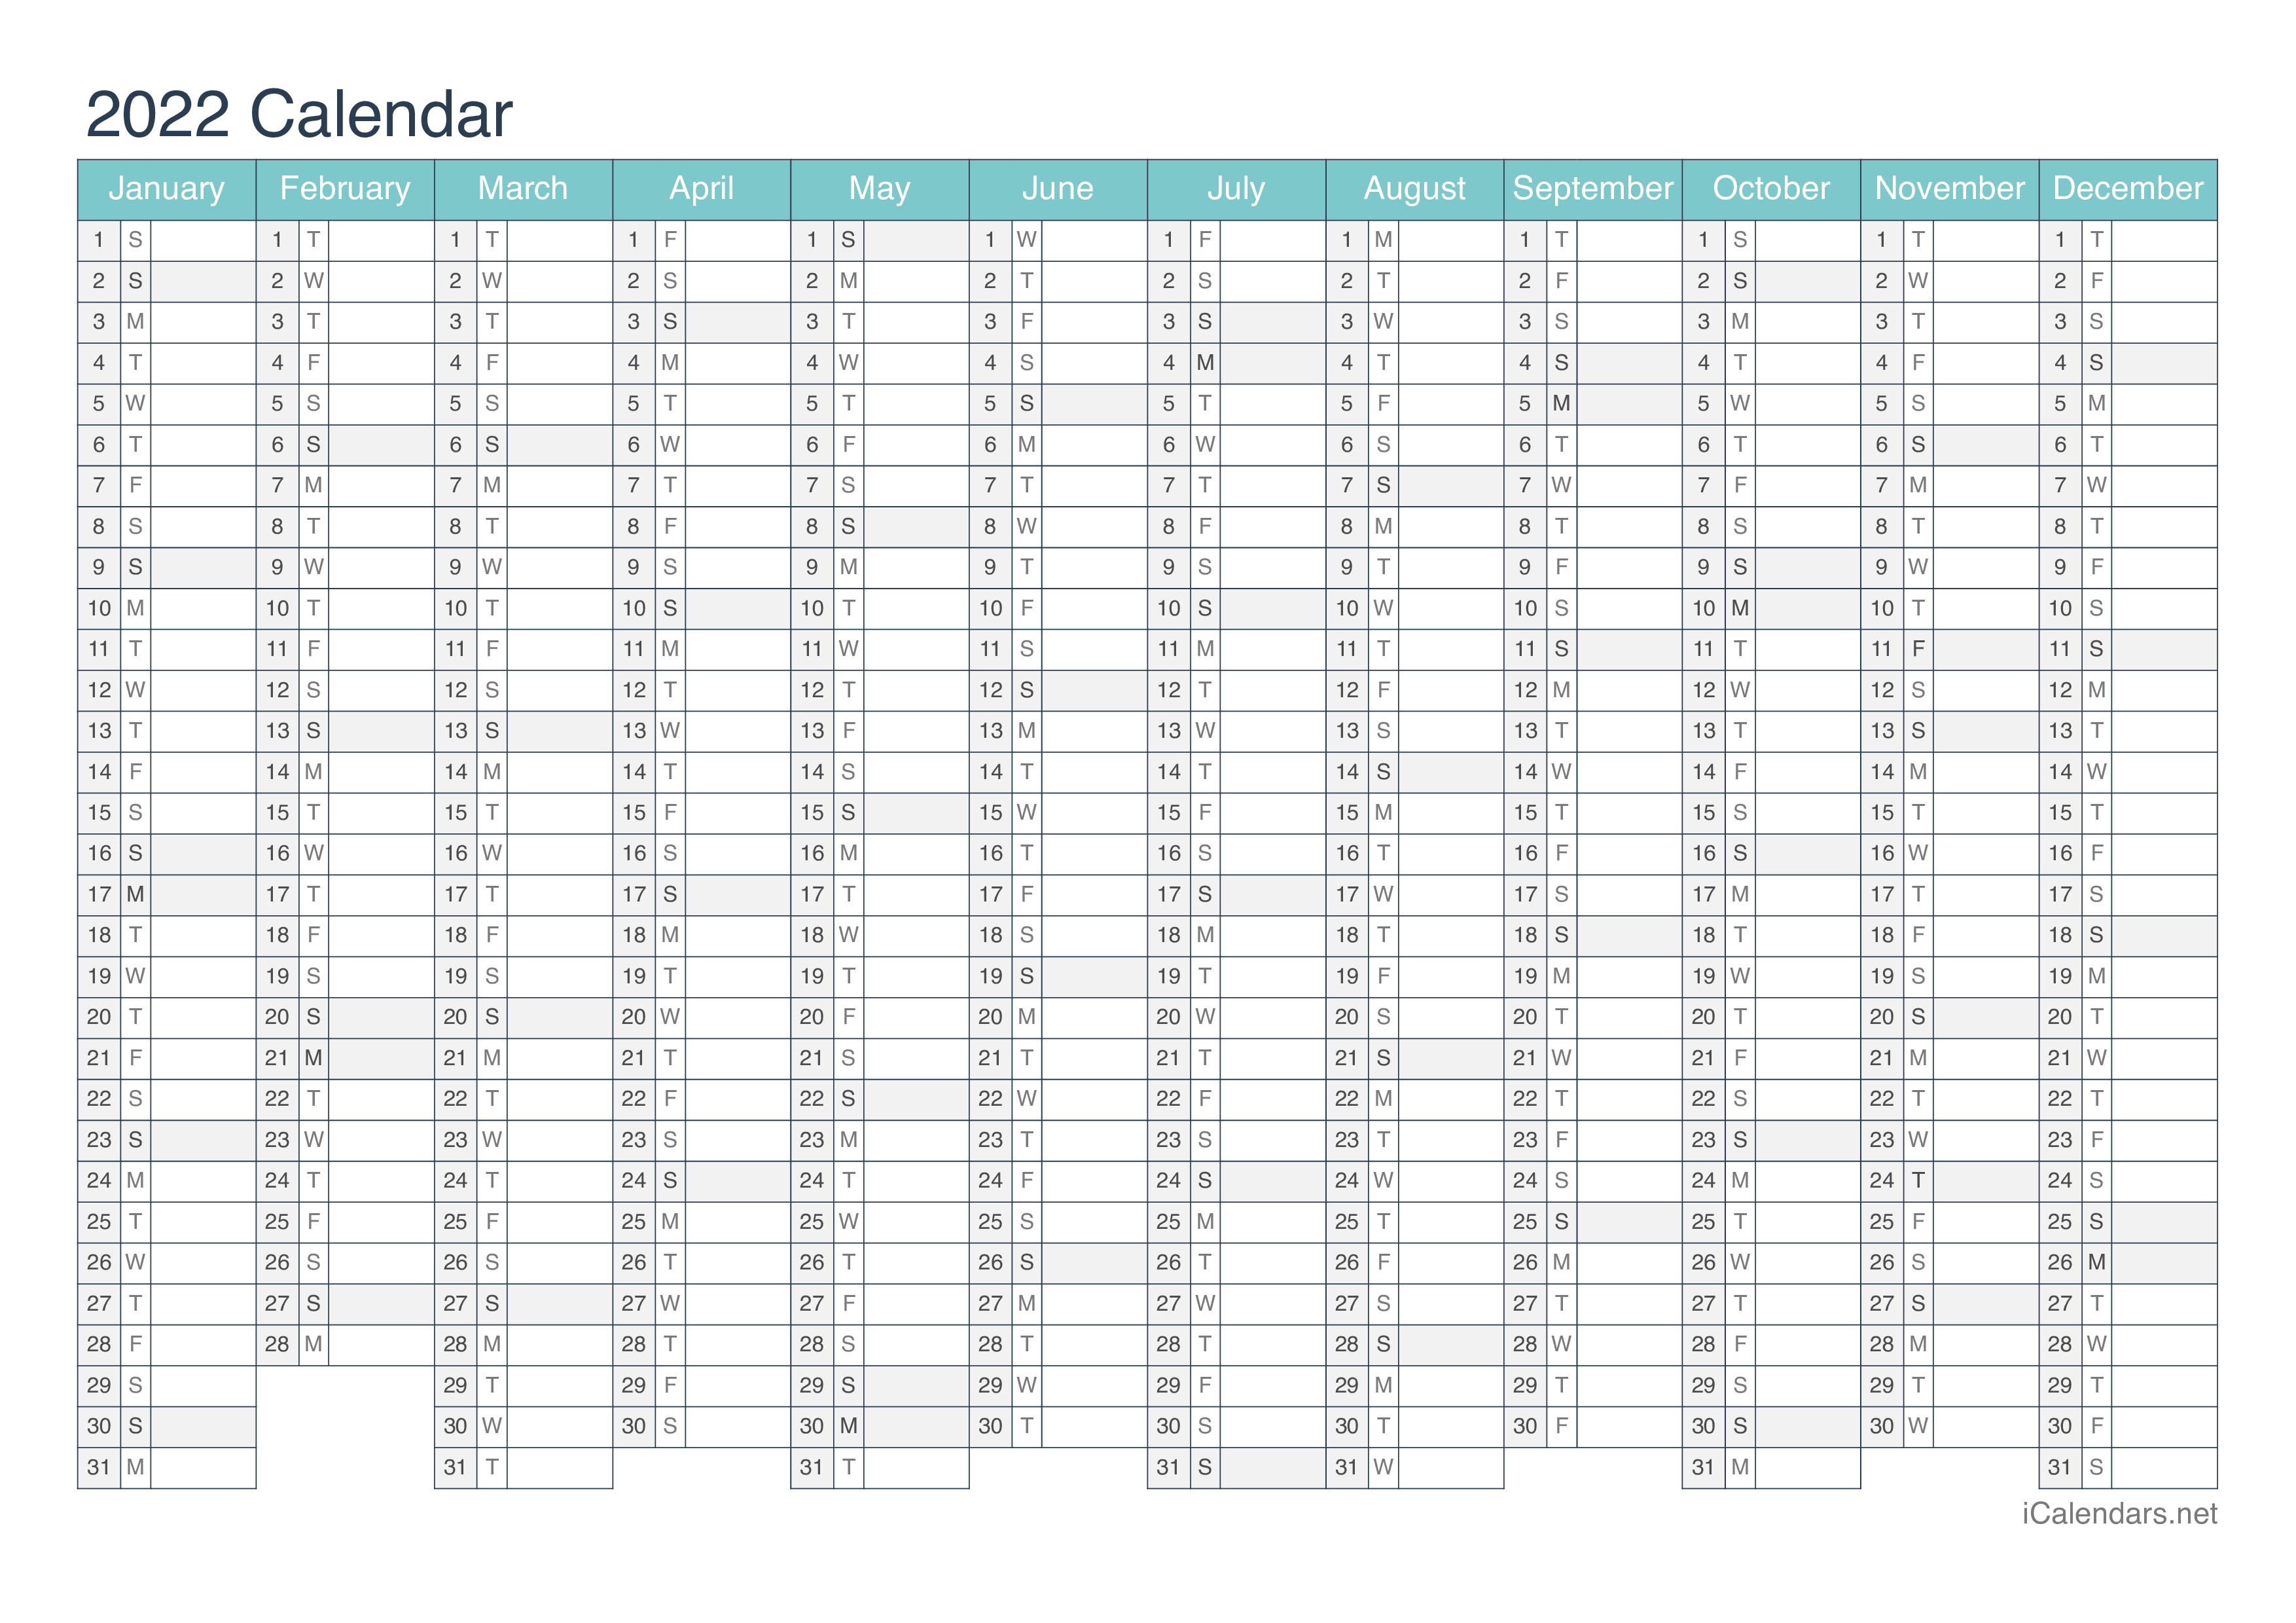 Libreoffice Calendar Template 2022 2022 Printable Calendar - Pdf Or Excel - Icalendars.net